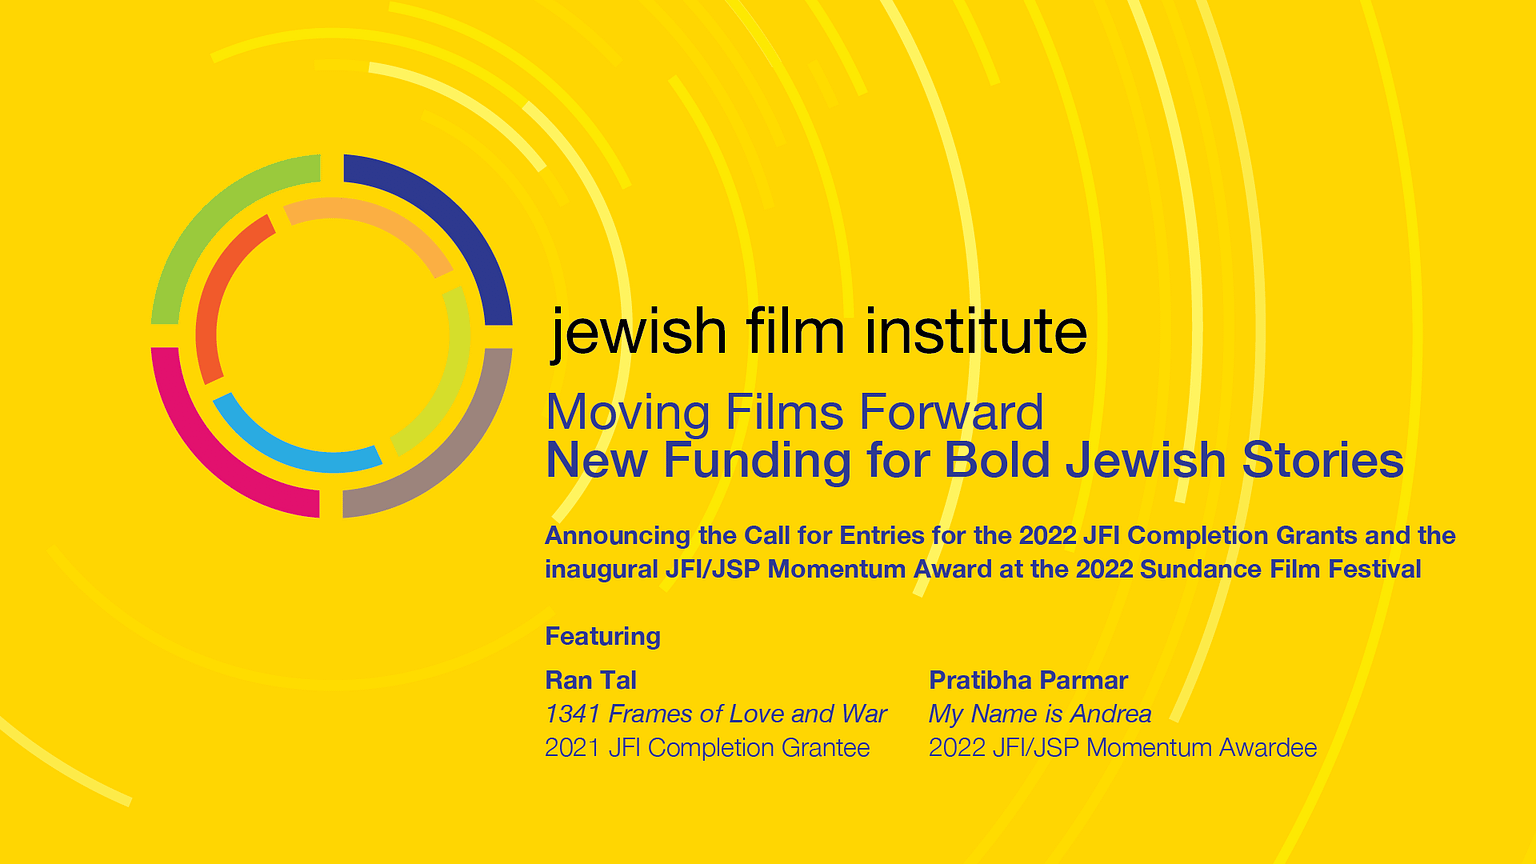 Jewish Film Institute Presents Filmmaker Conversations and Funding Opportunities at 2022 Sundance Film Festival